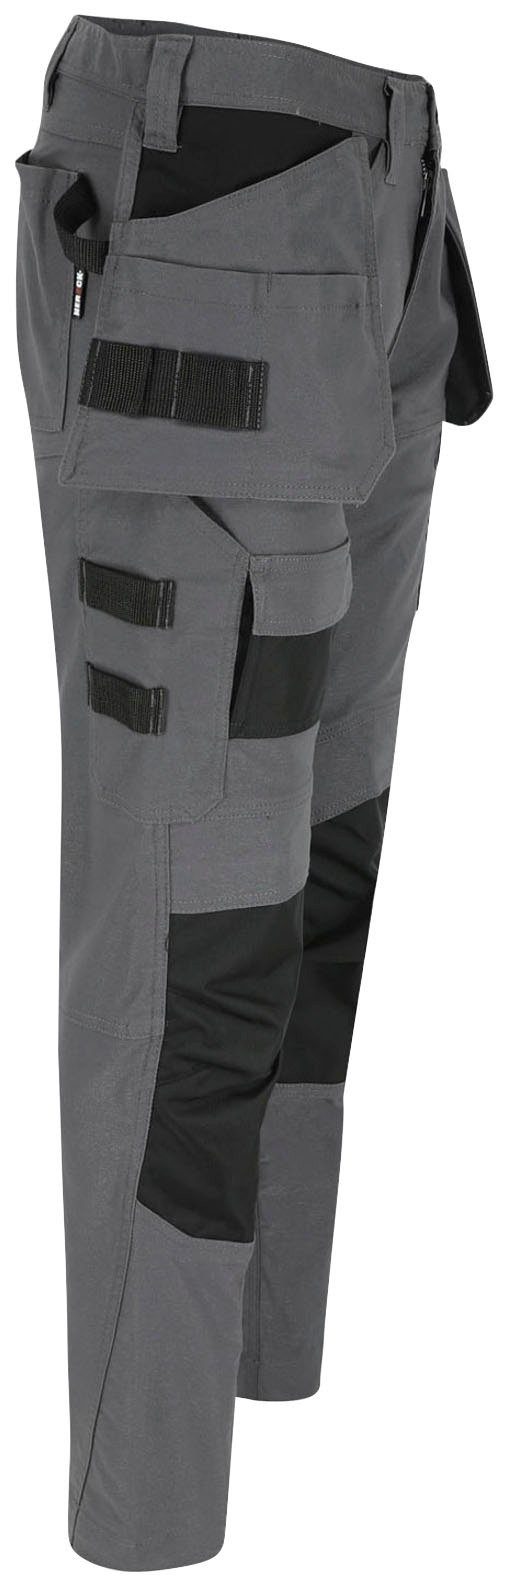 Herock Arbeitshose HEROCLES (Coolmax® Technologie) Multi-pocket, grau sehr Nageltaschen Stretch, feste robust